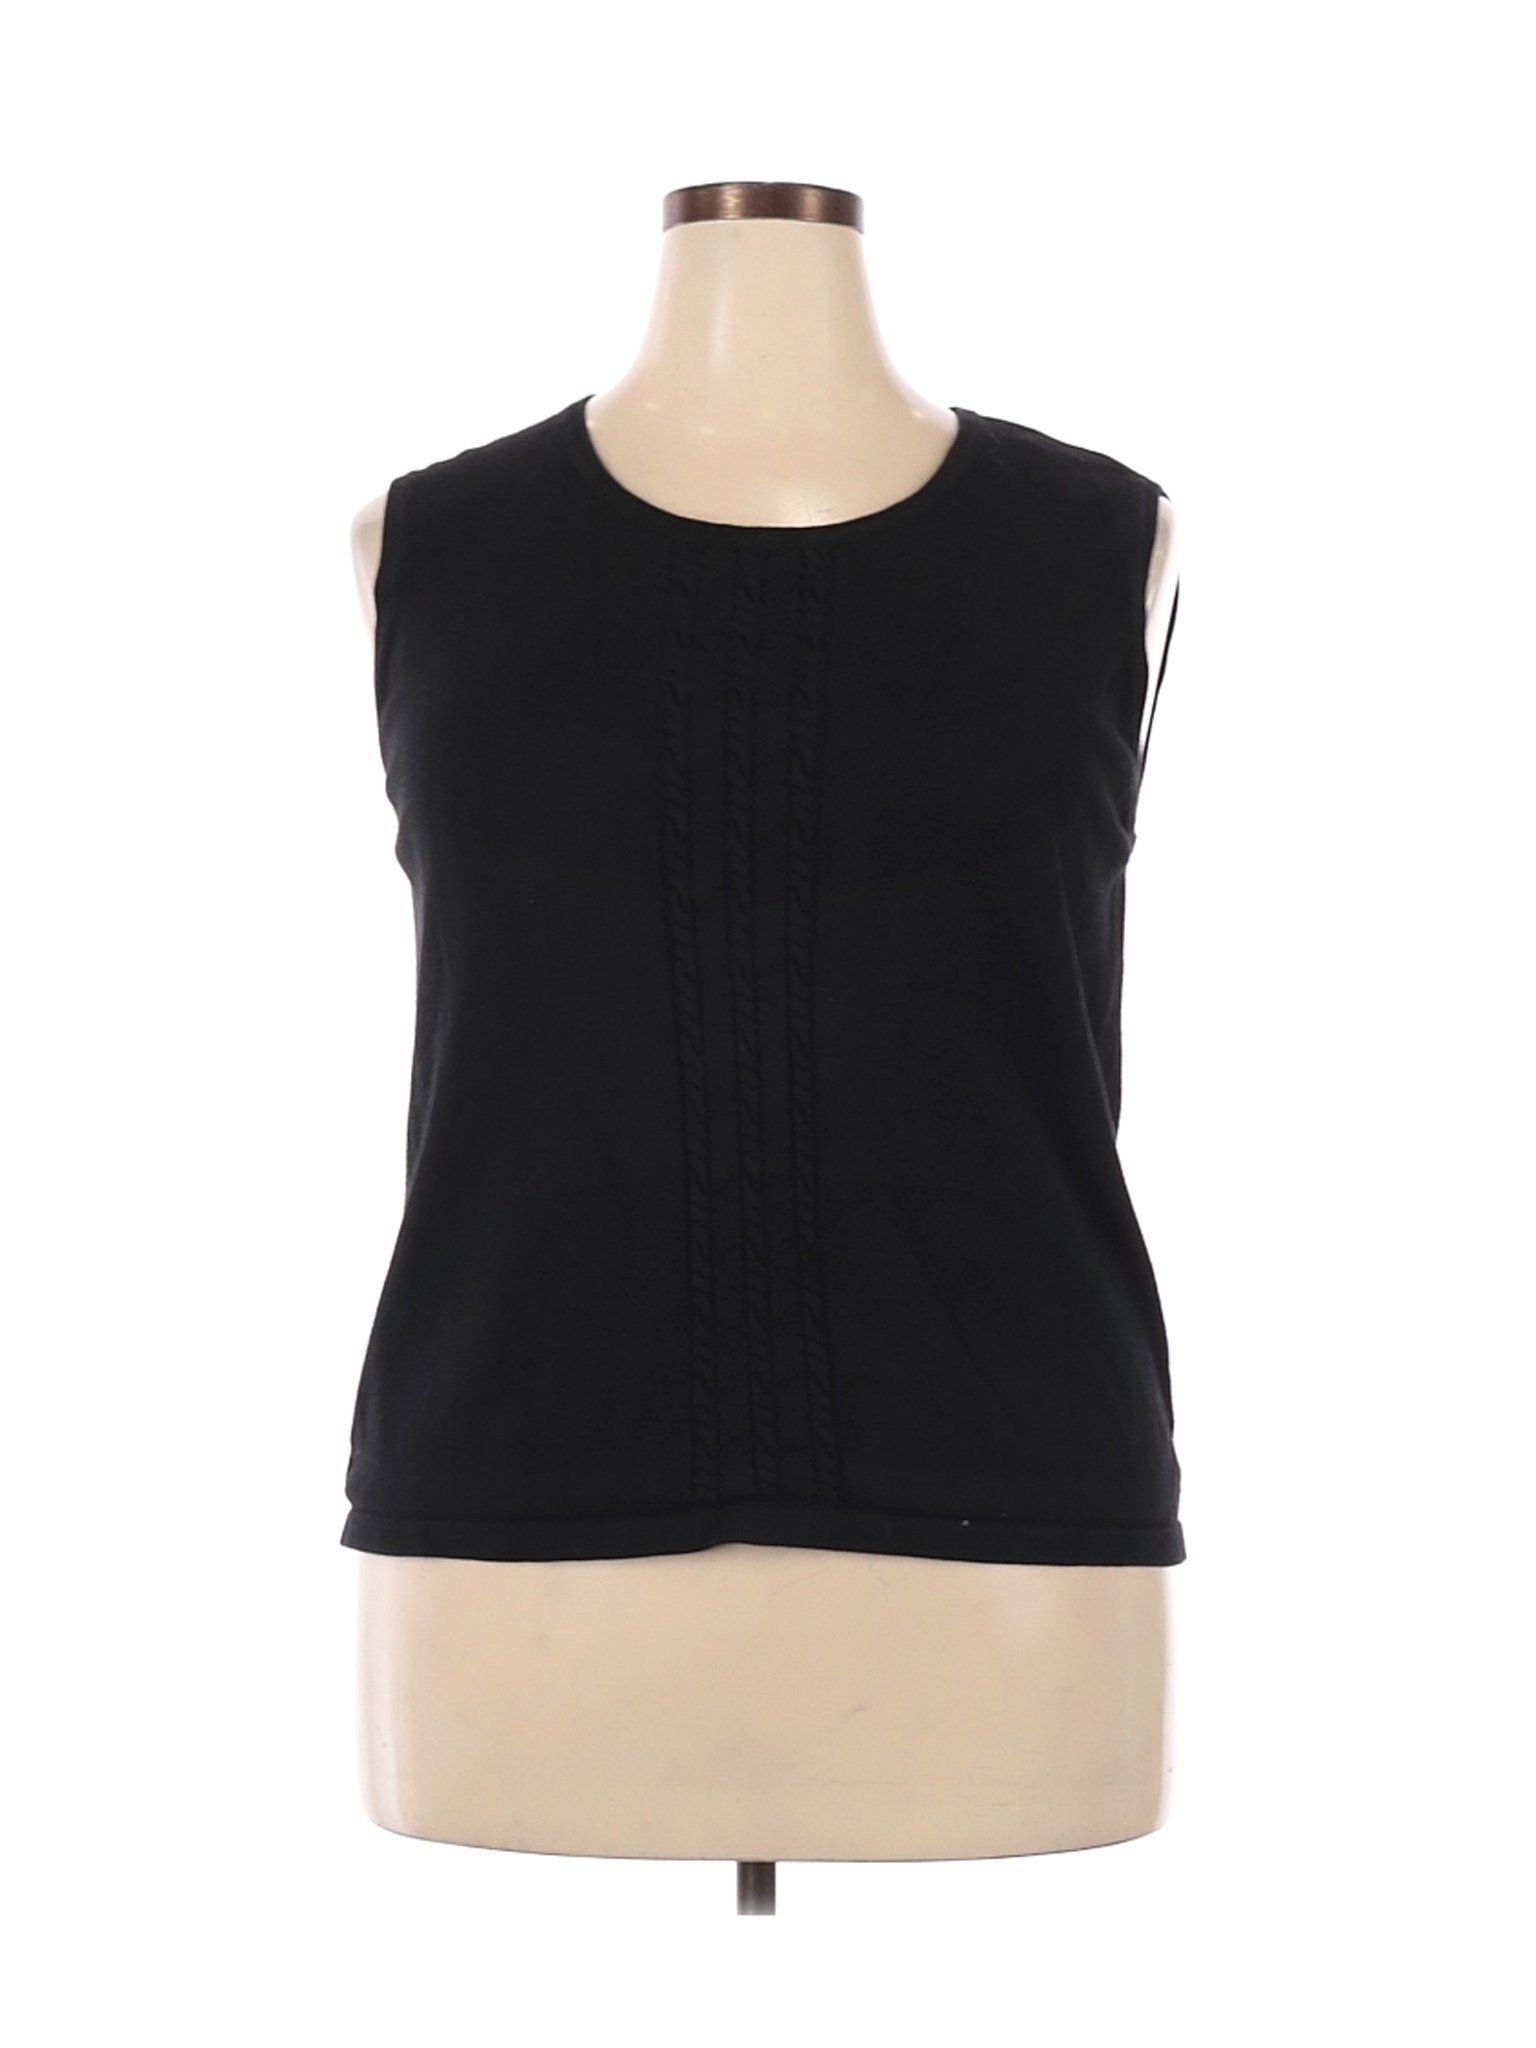 Evan Picone Solid Black Pullover Sweater Size 2X (Plus) - 77% off | thredUP